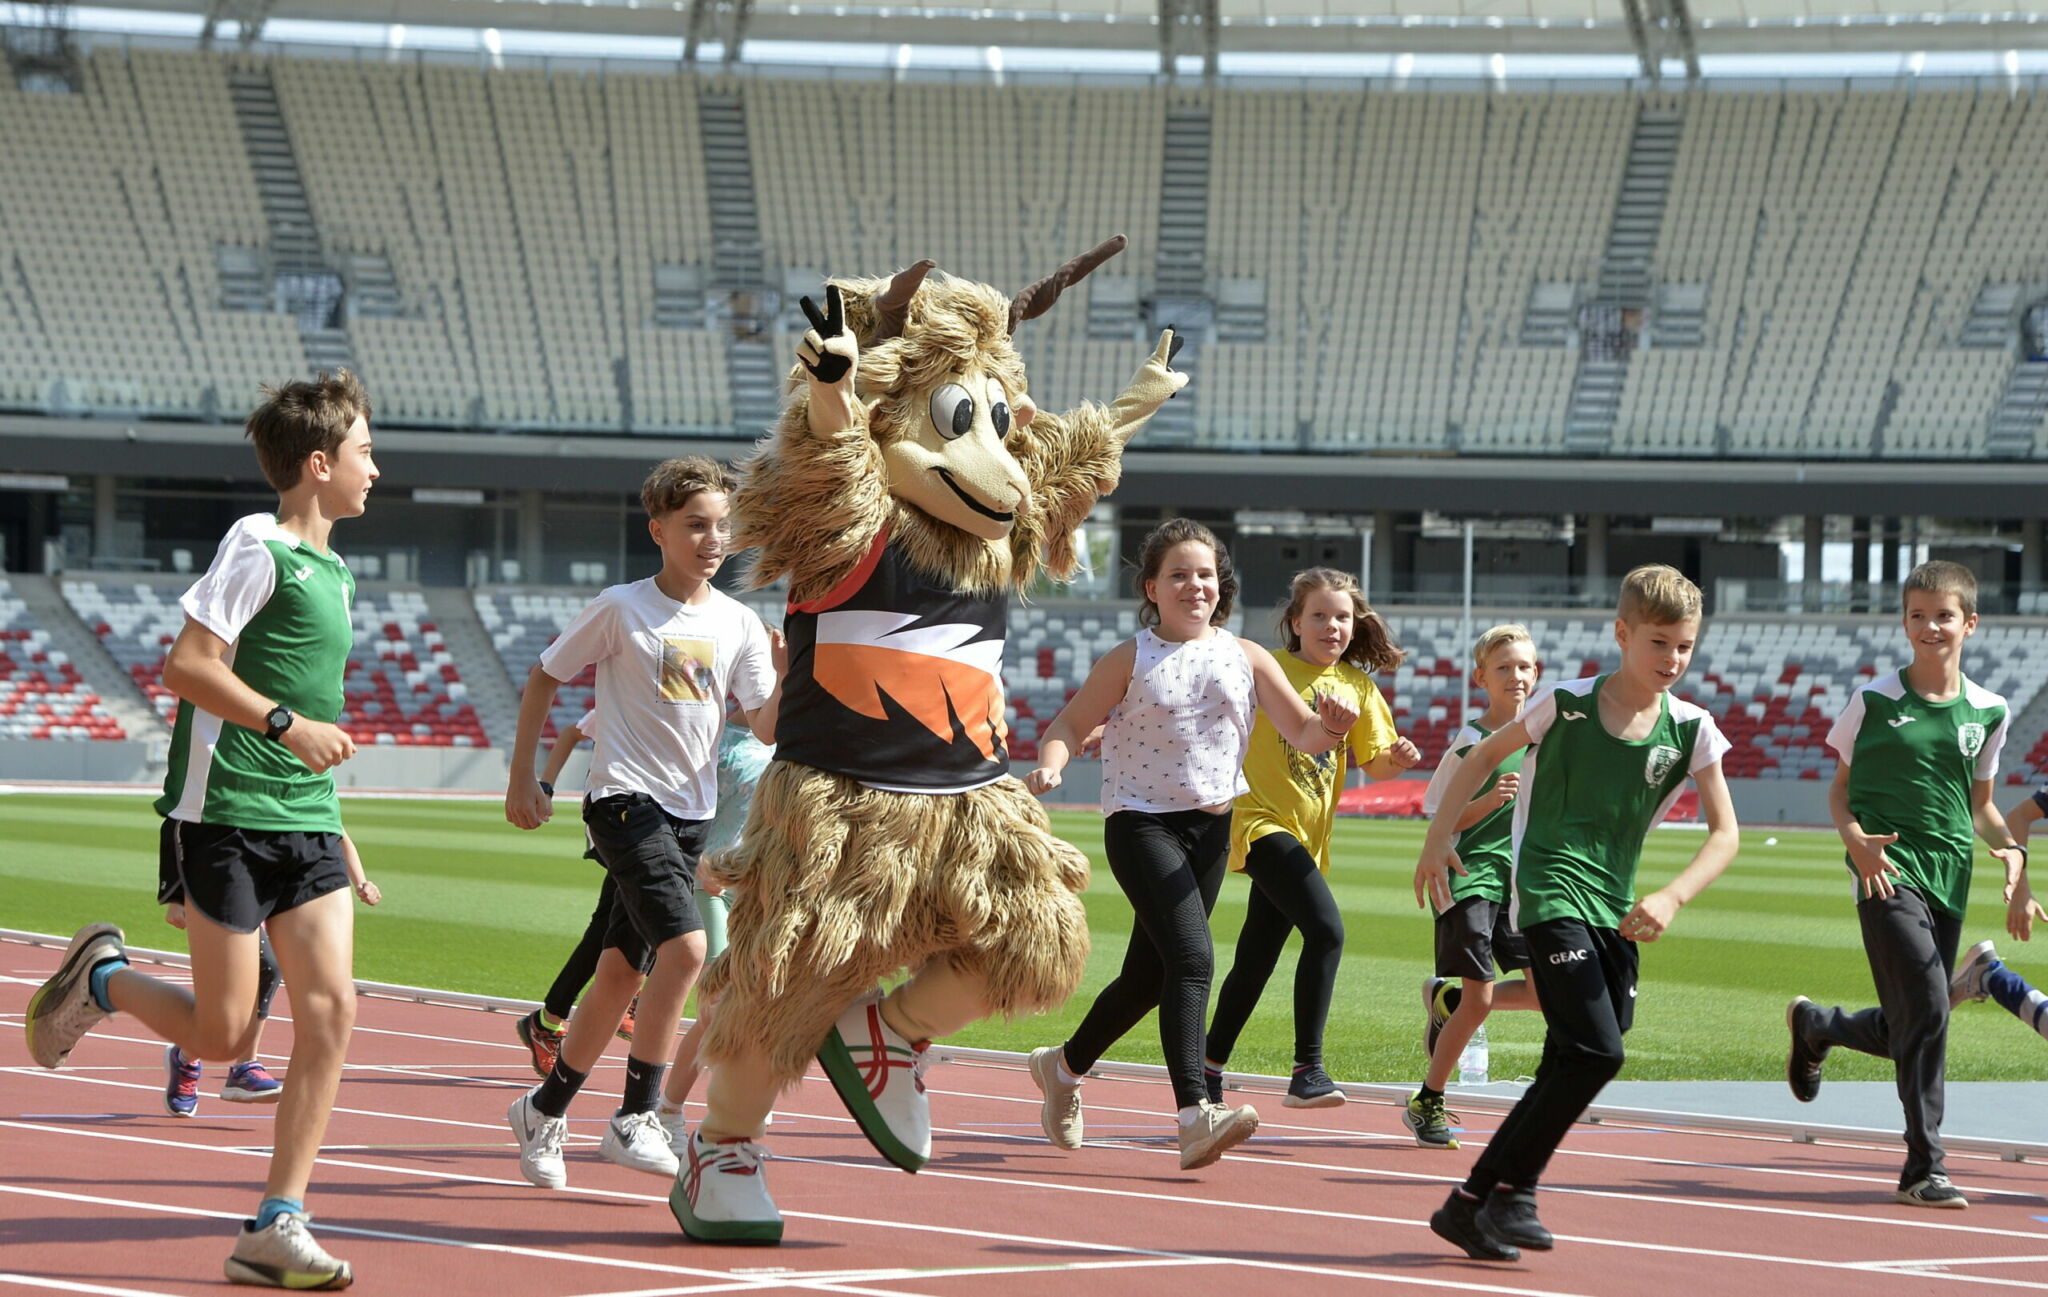 The IAAF World Cup mascot, Youhuu, is introduced